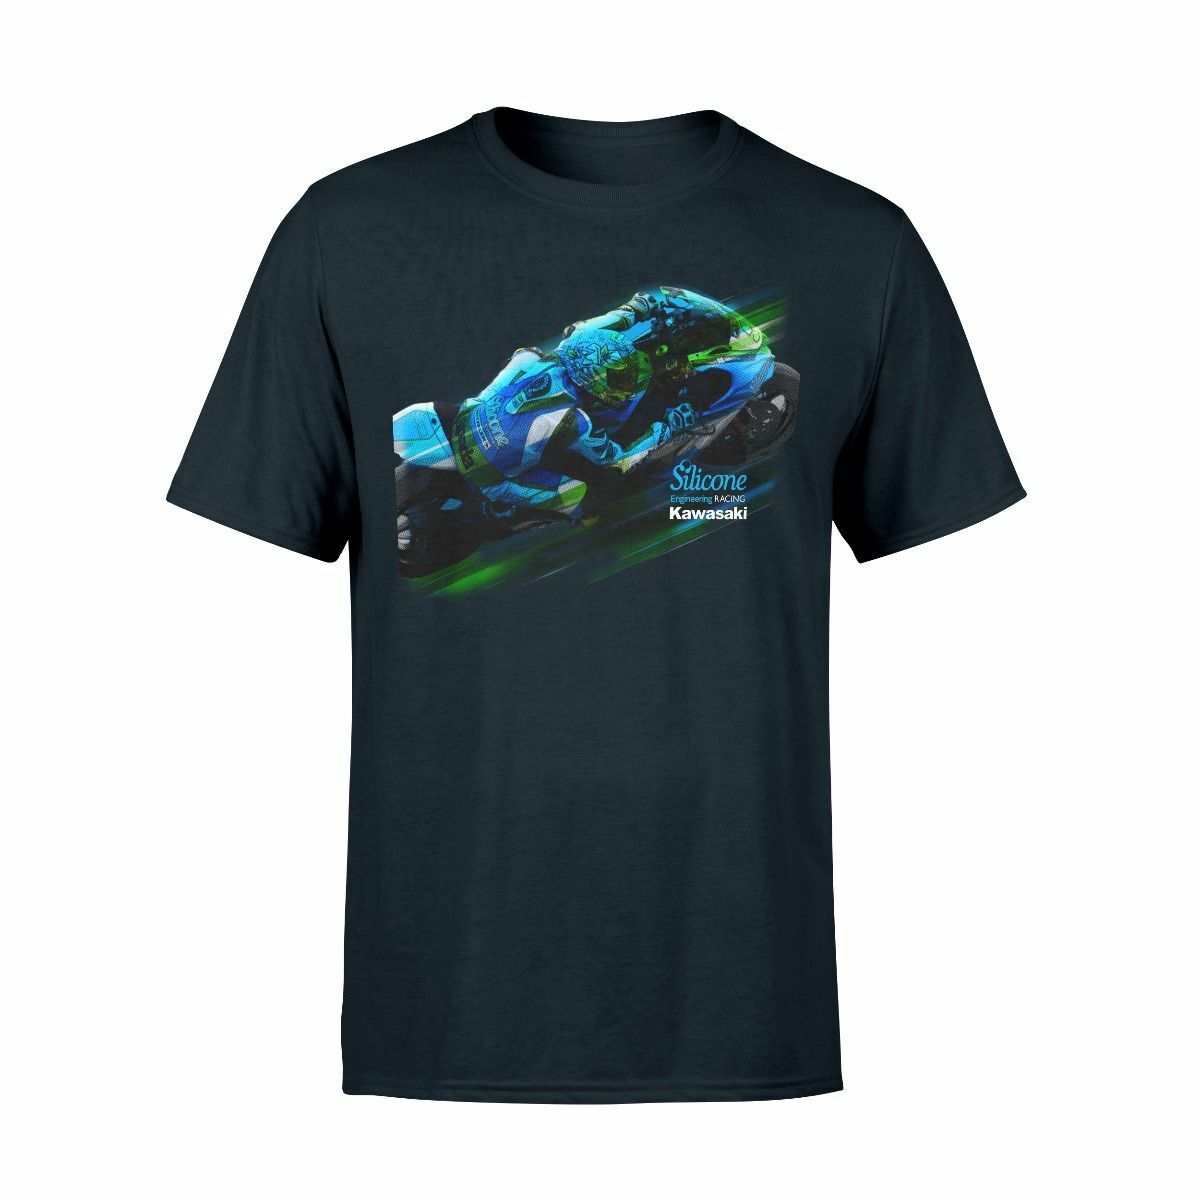 Official Silicone Racing Kawasaki Fan's T Shirt -